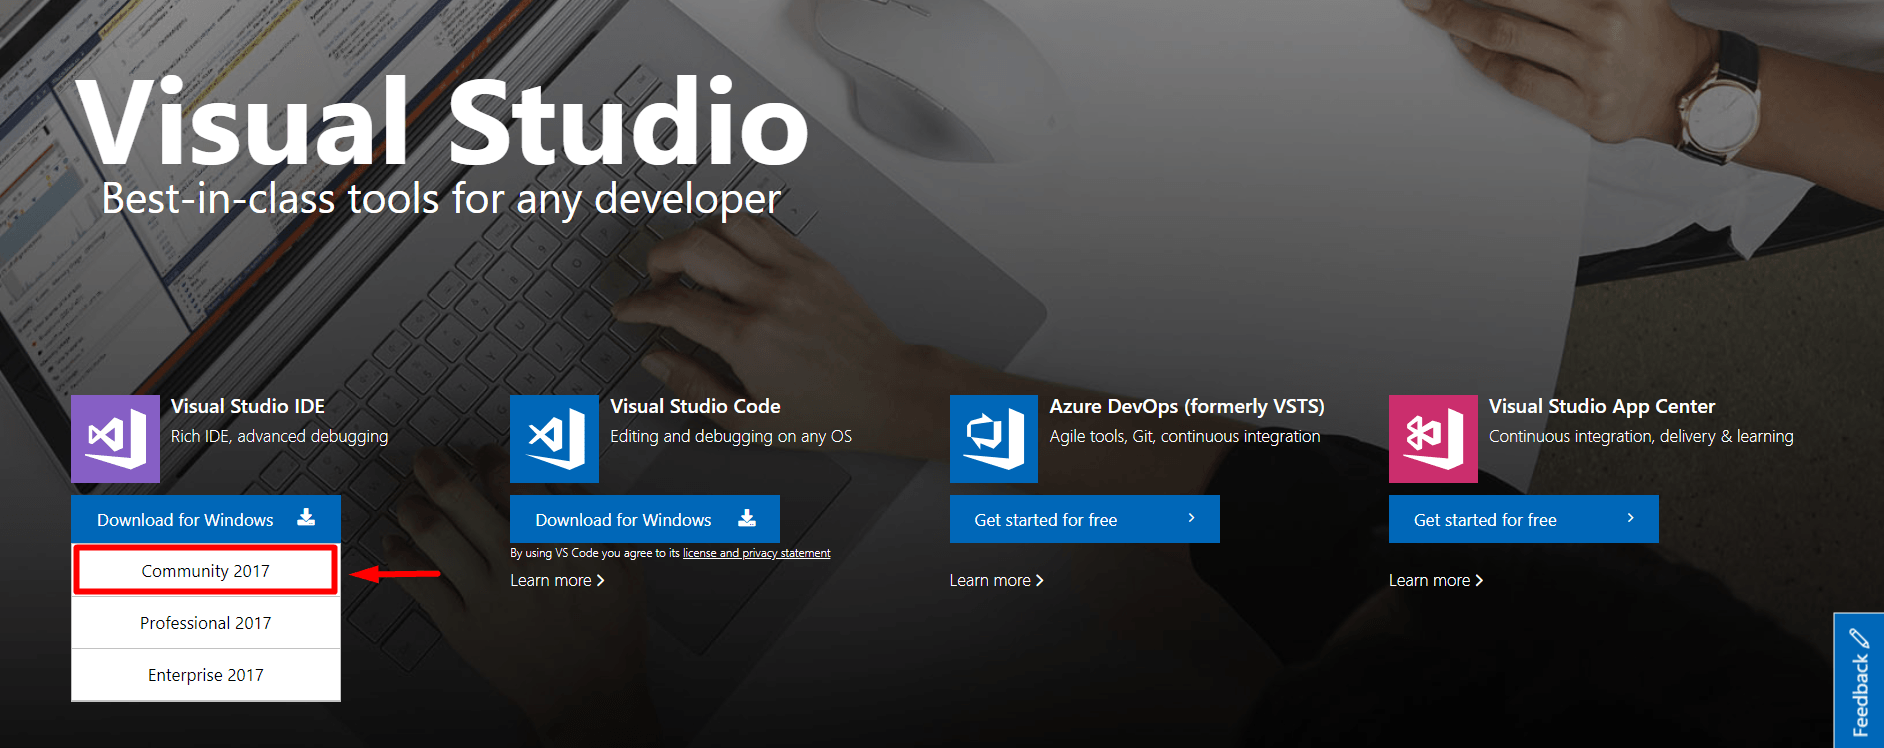 visual studio community edition download page